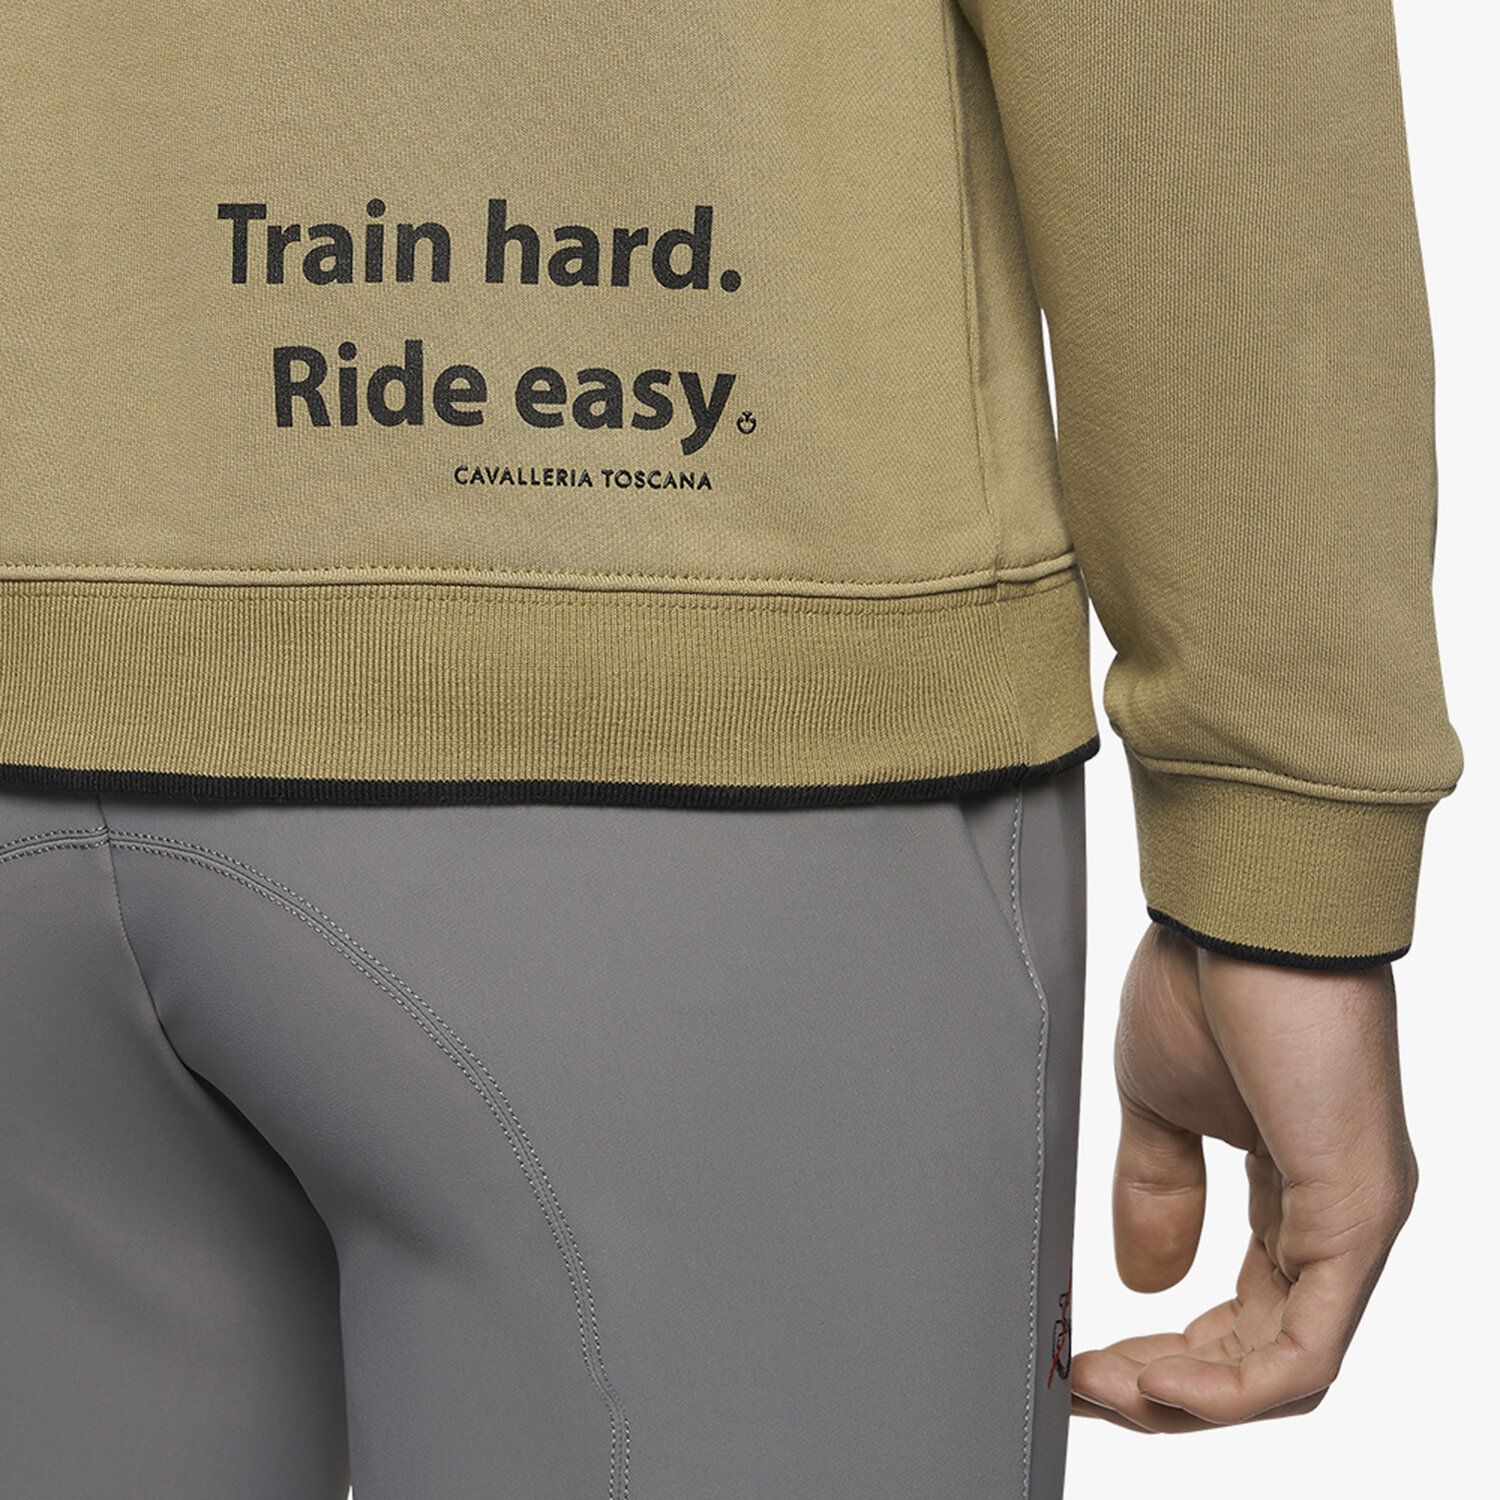 Cavalleria Toscana Men's Train Hard Ride Easy Sweatshirt GREY-6